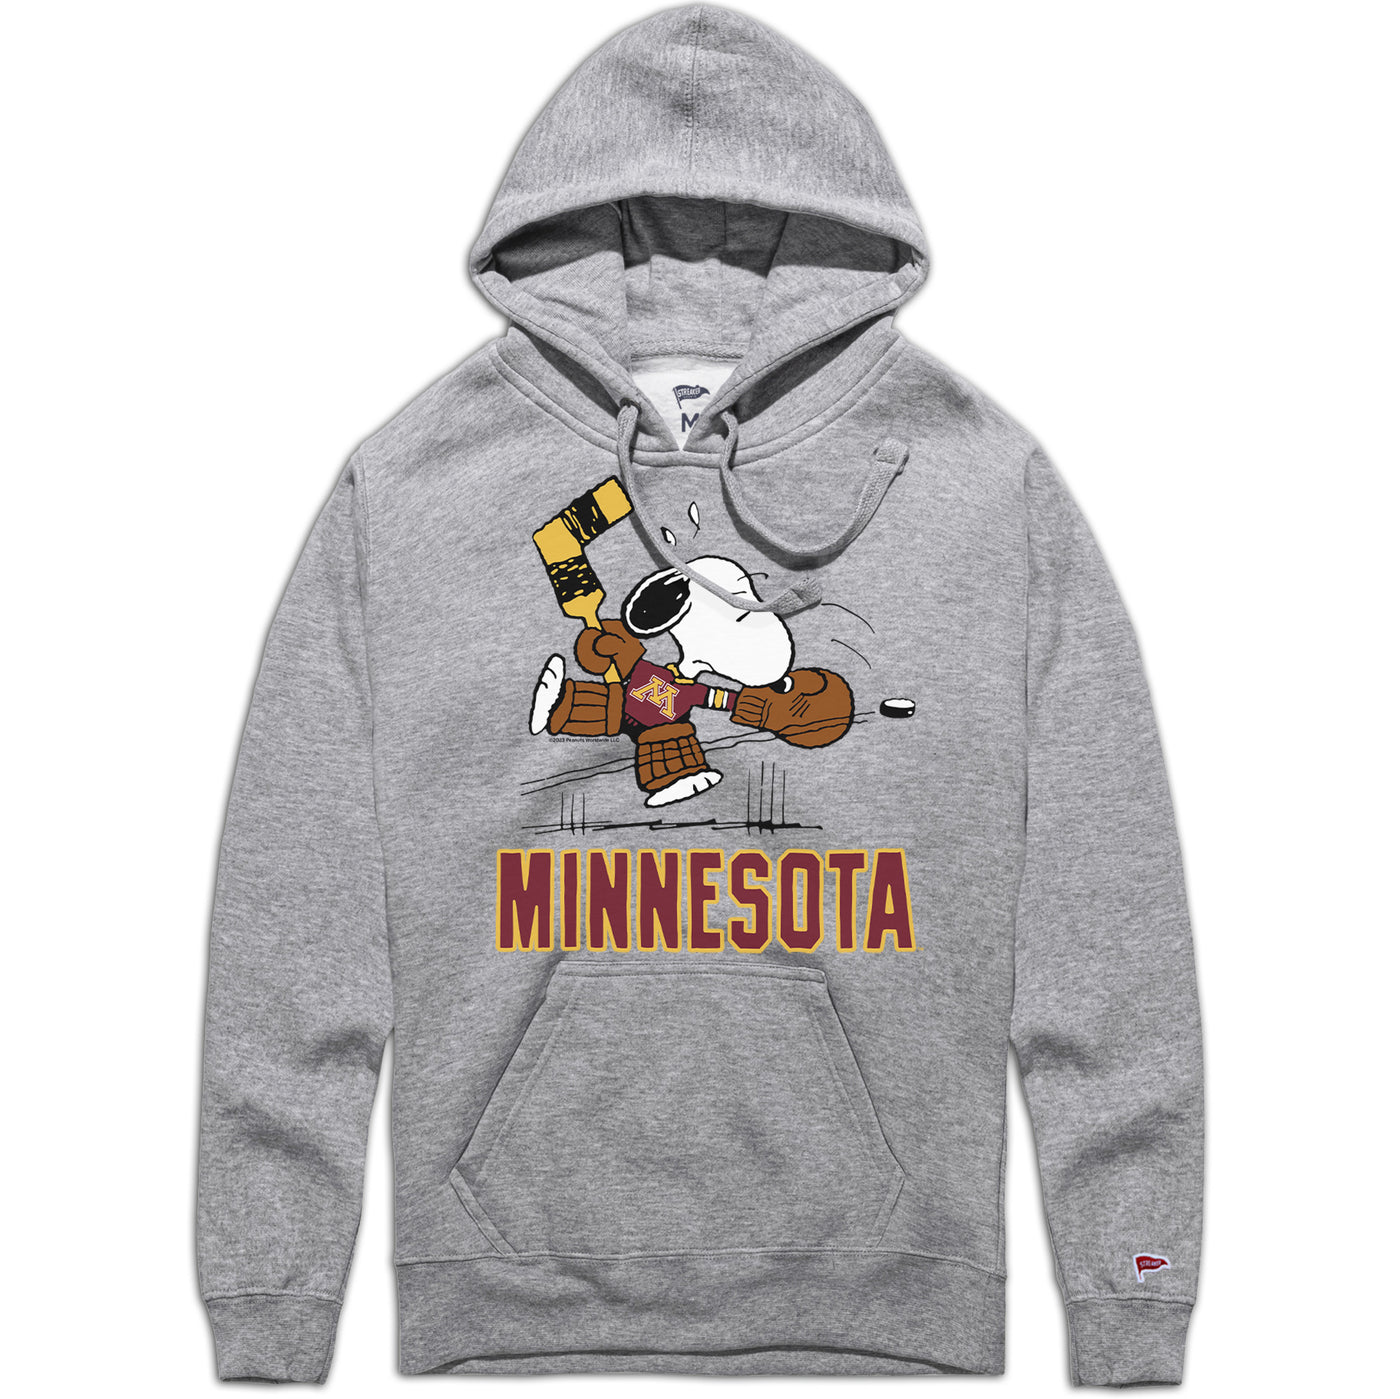 Peanuts x Minnesota Snoopy Goalie Hoodie - Streaker Sports